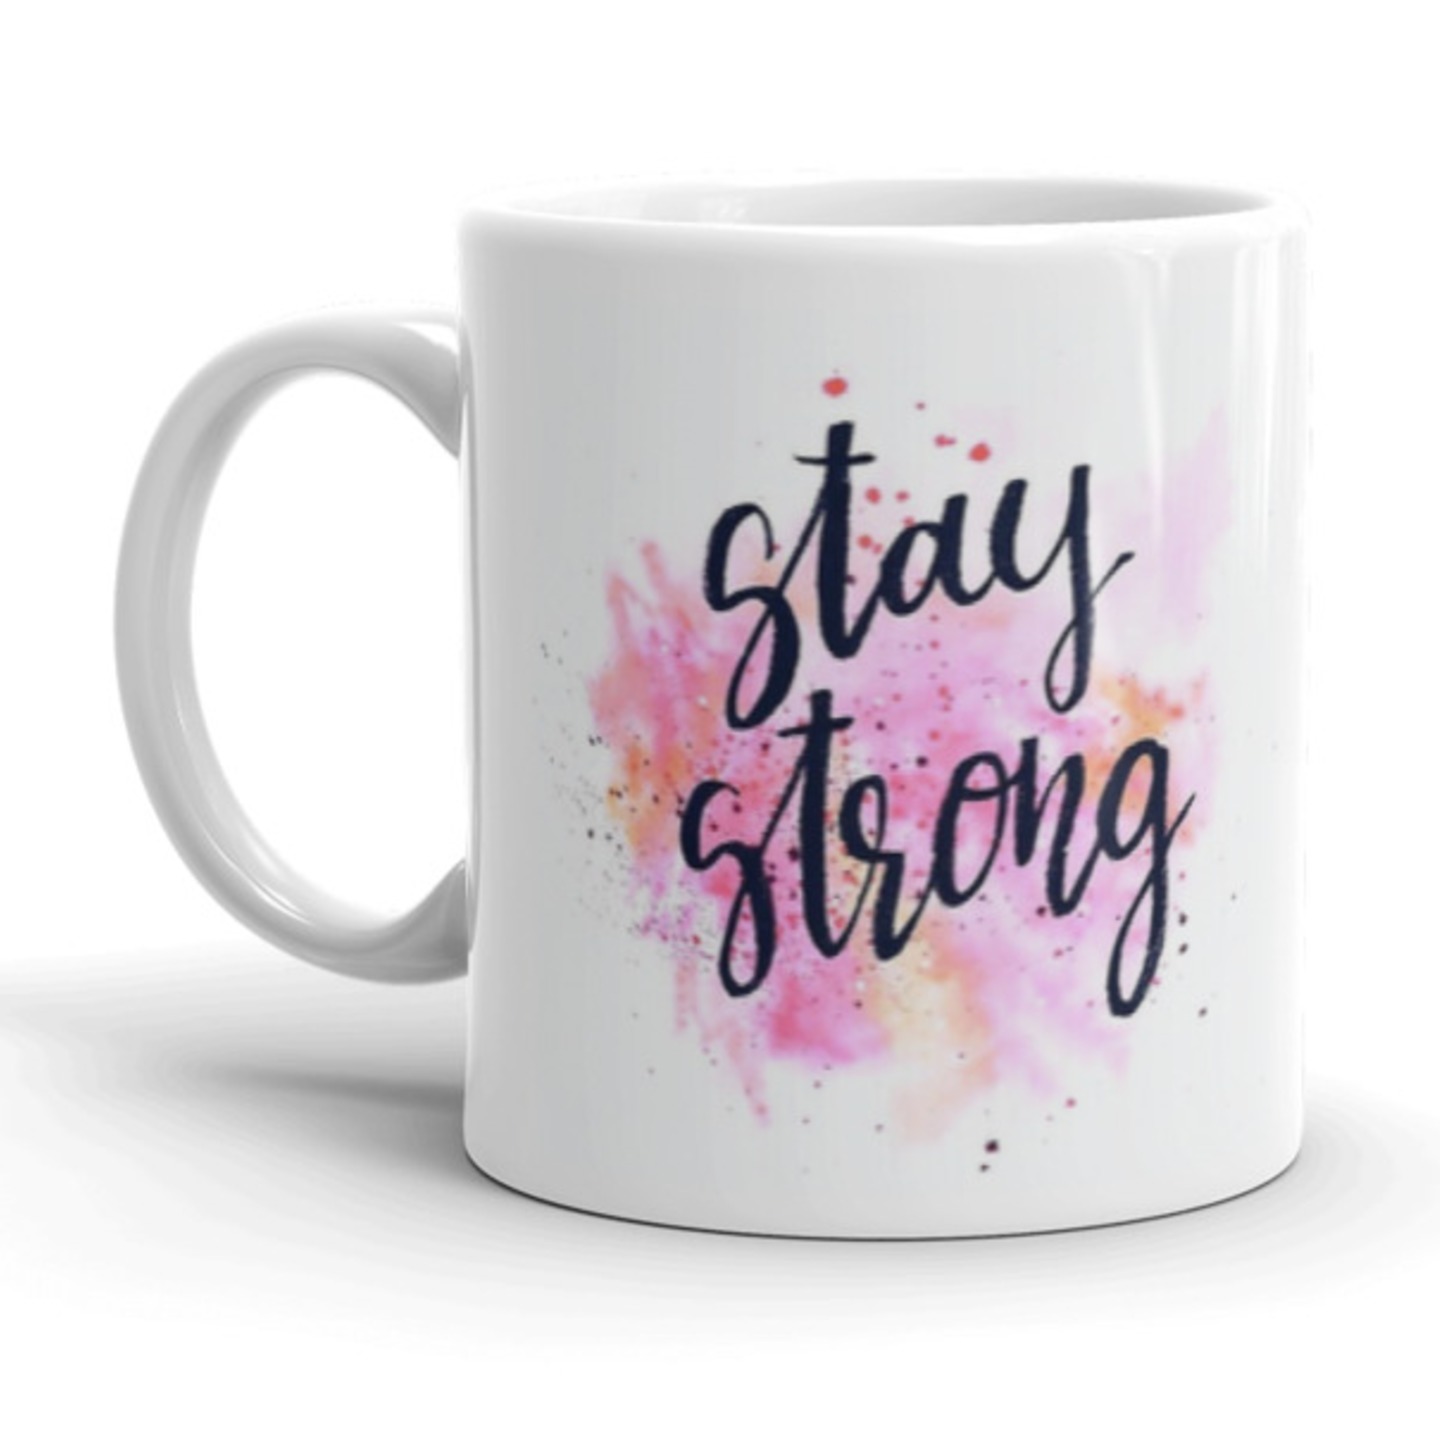 Ceramic Mug - Stay strong